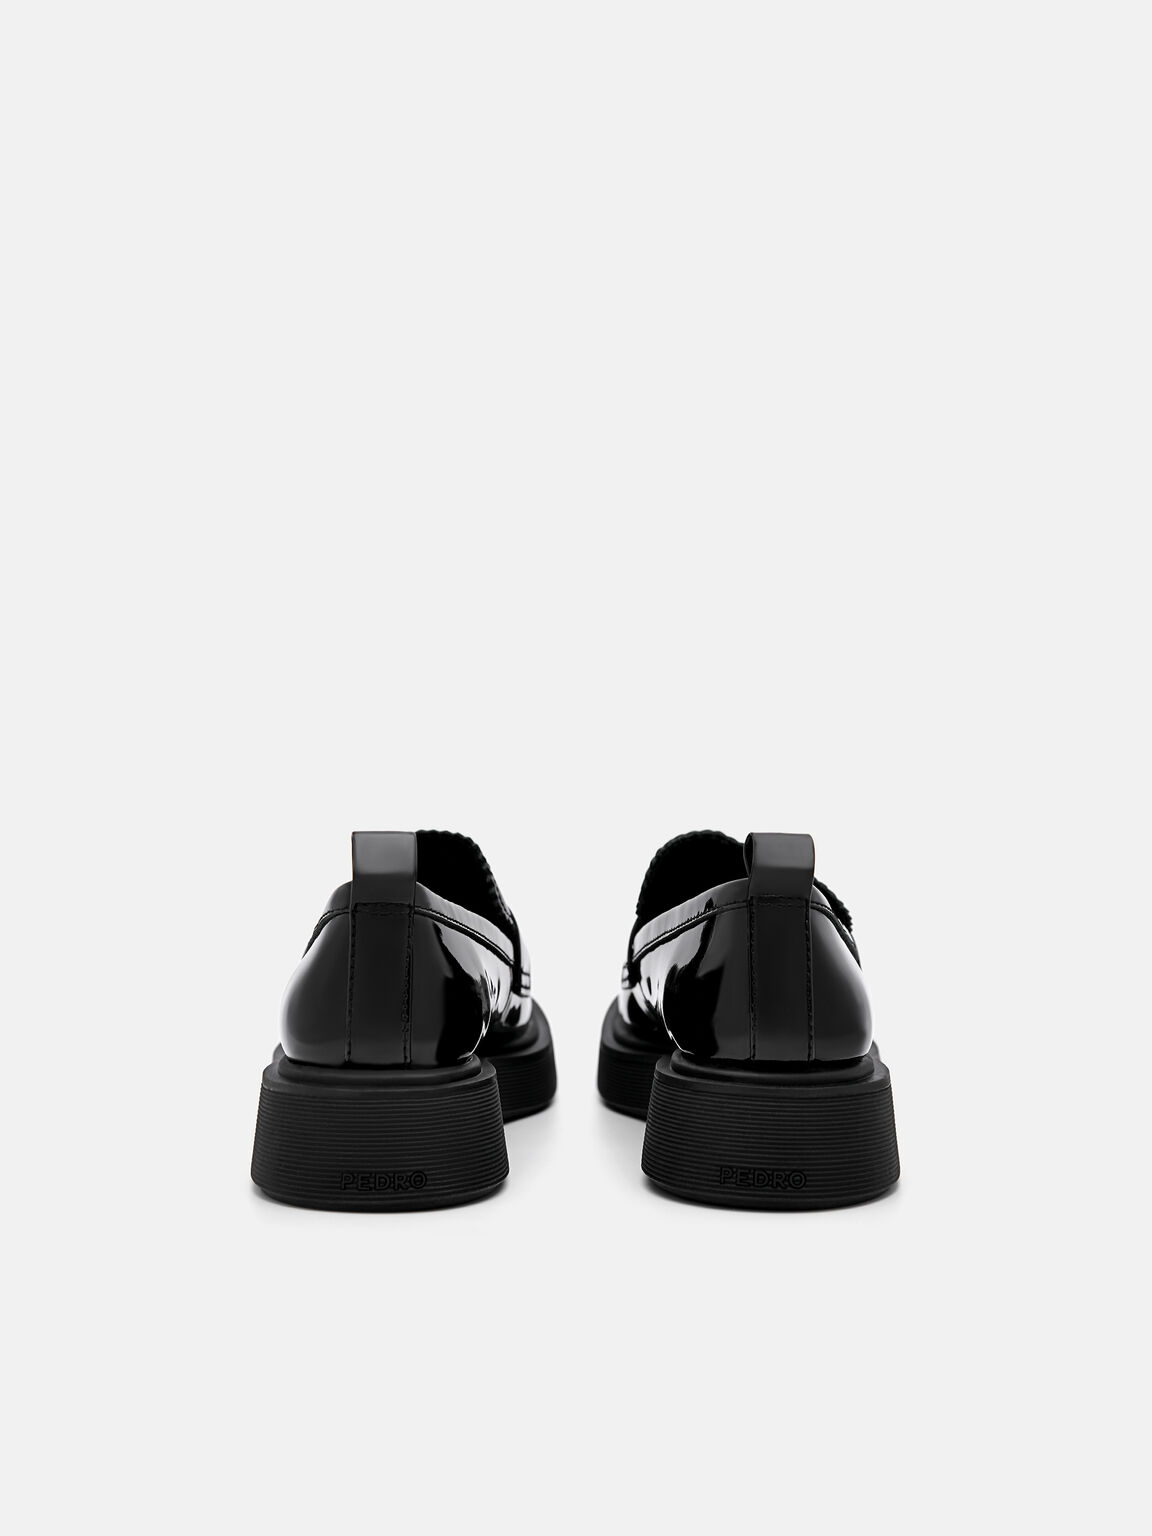 Wanda Leather Loafers, Black